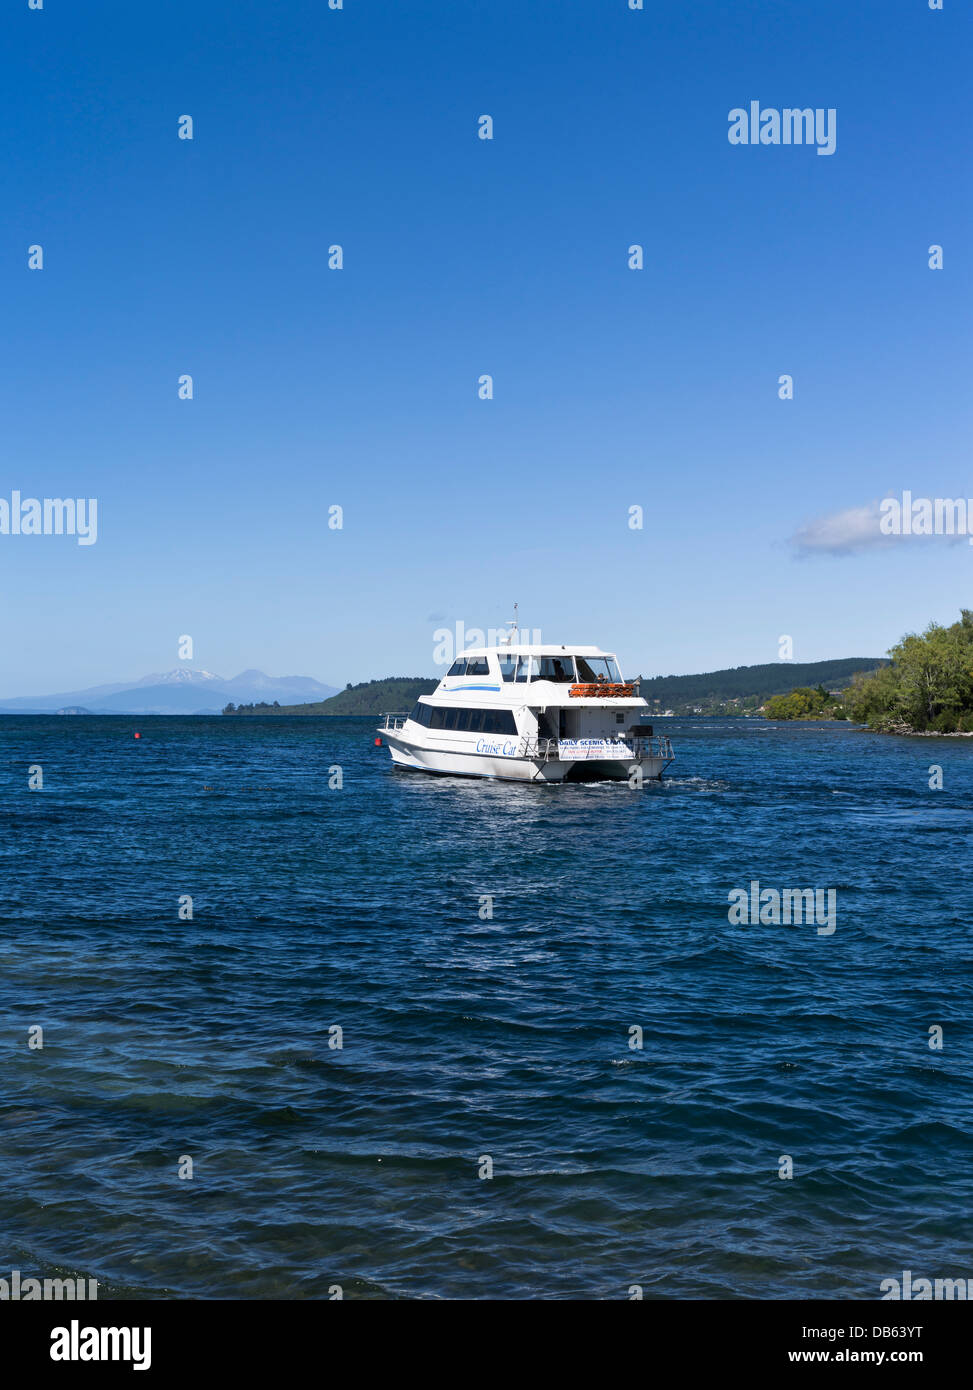 dh Lake Taupo TAUPO NEW ZEALAND Cruise Cat catamaran tourist trips Lake Taupo cruising trip Stock Photo